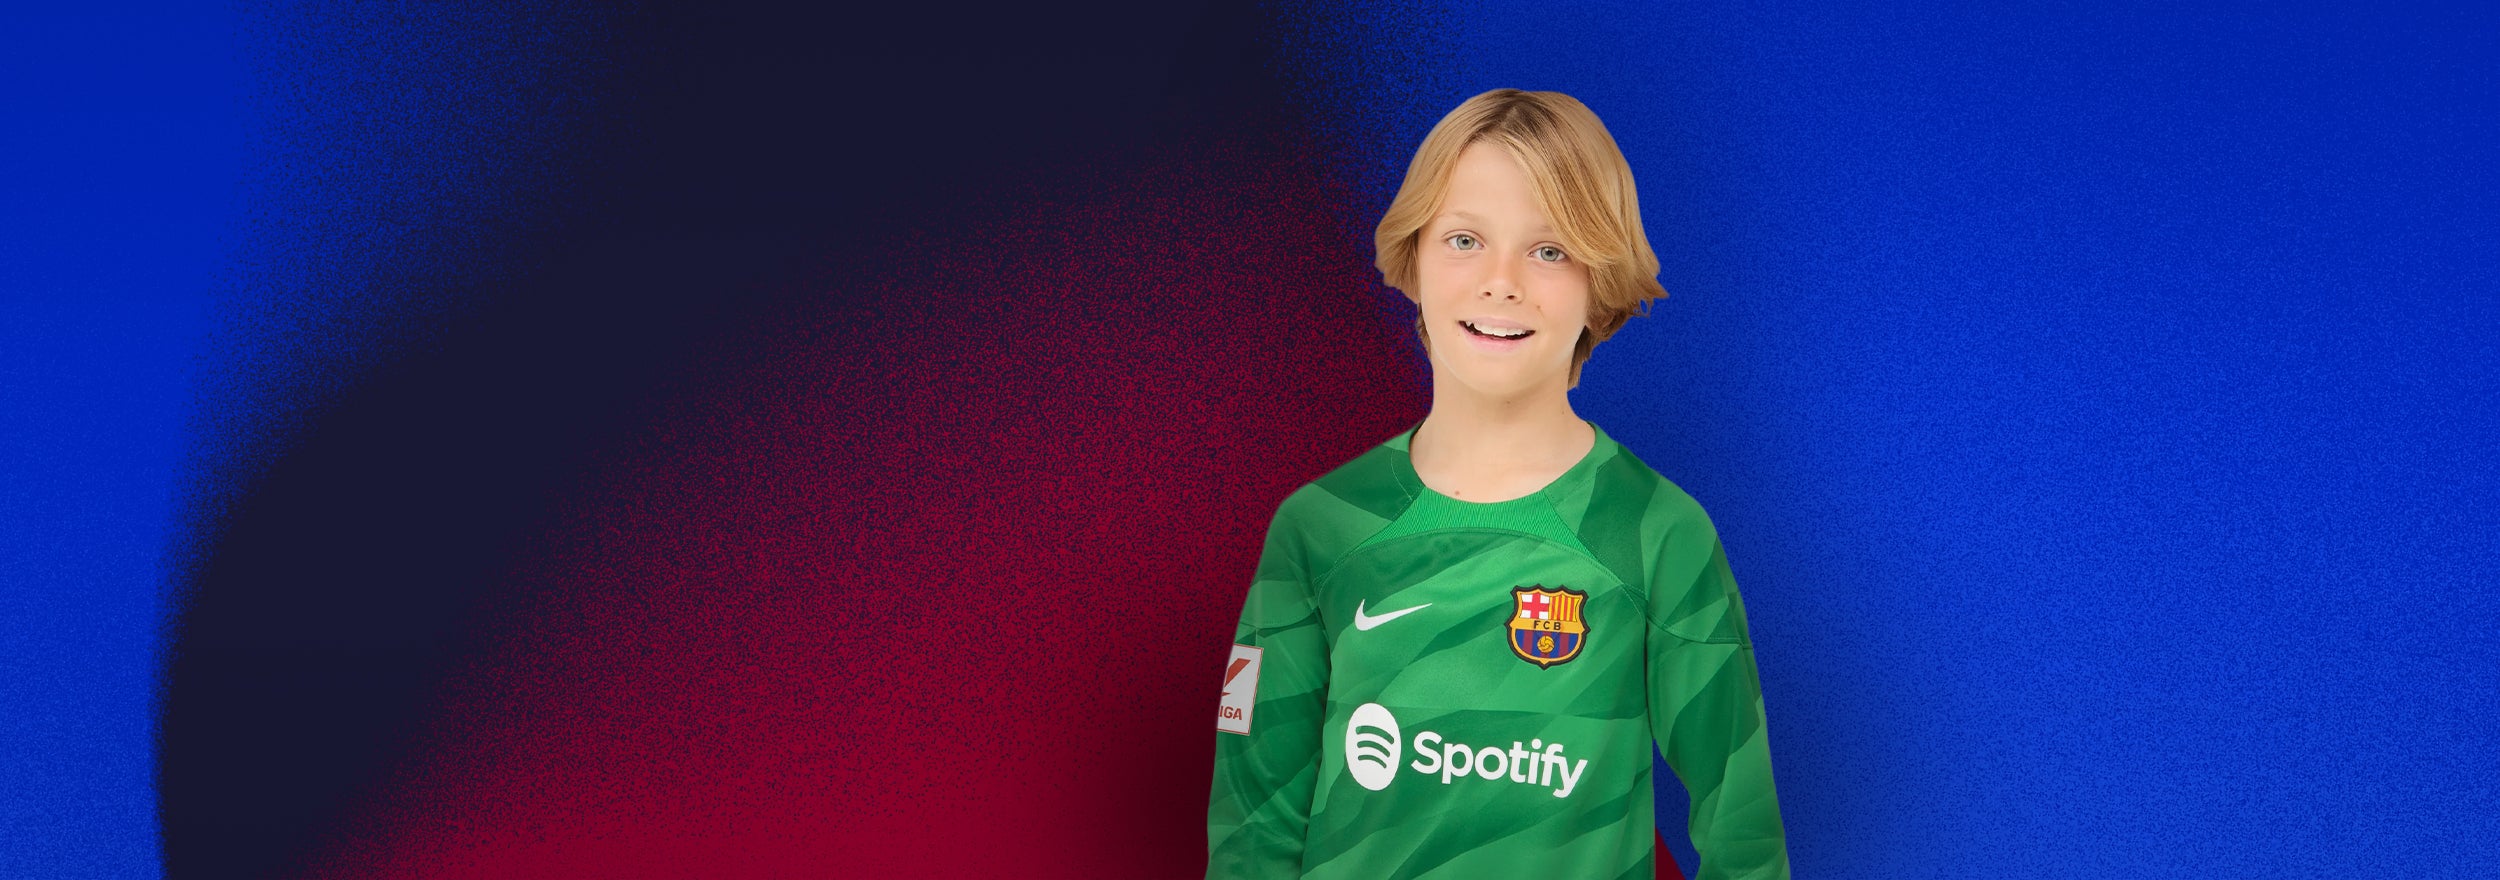 Conjunto portero FC Barcelona 22/23 - Niño/a pequeño/a